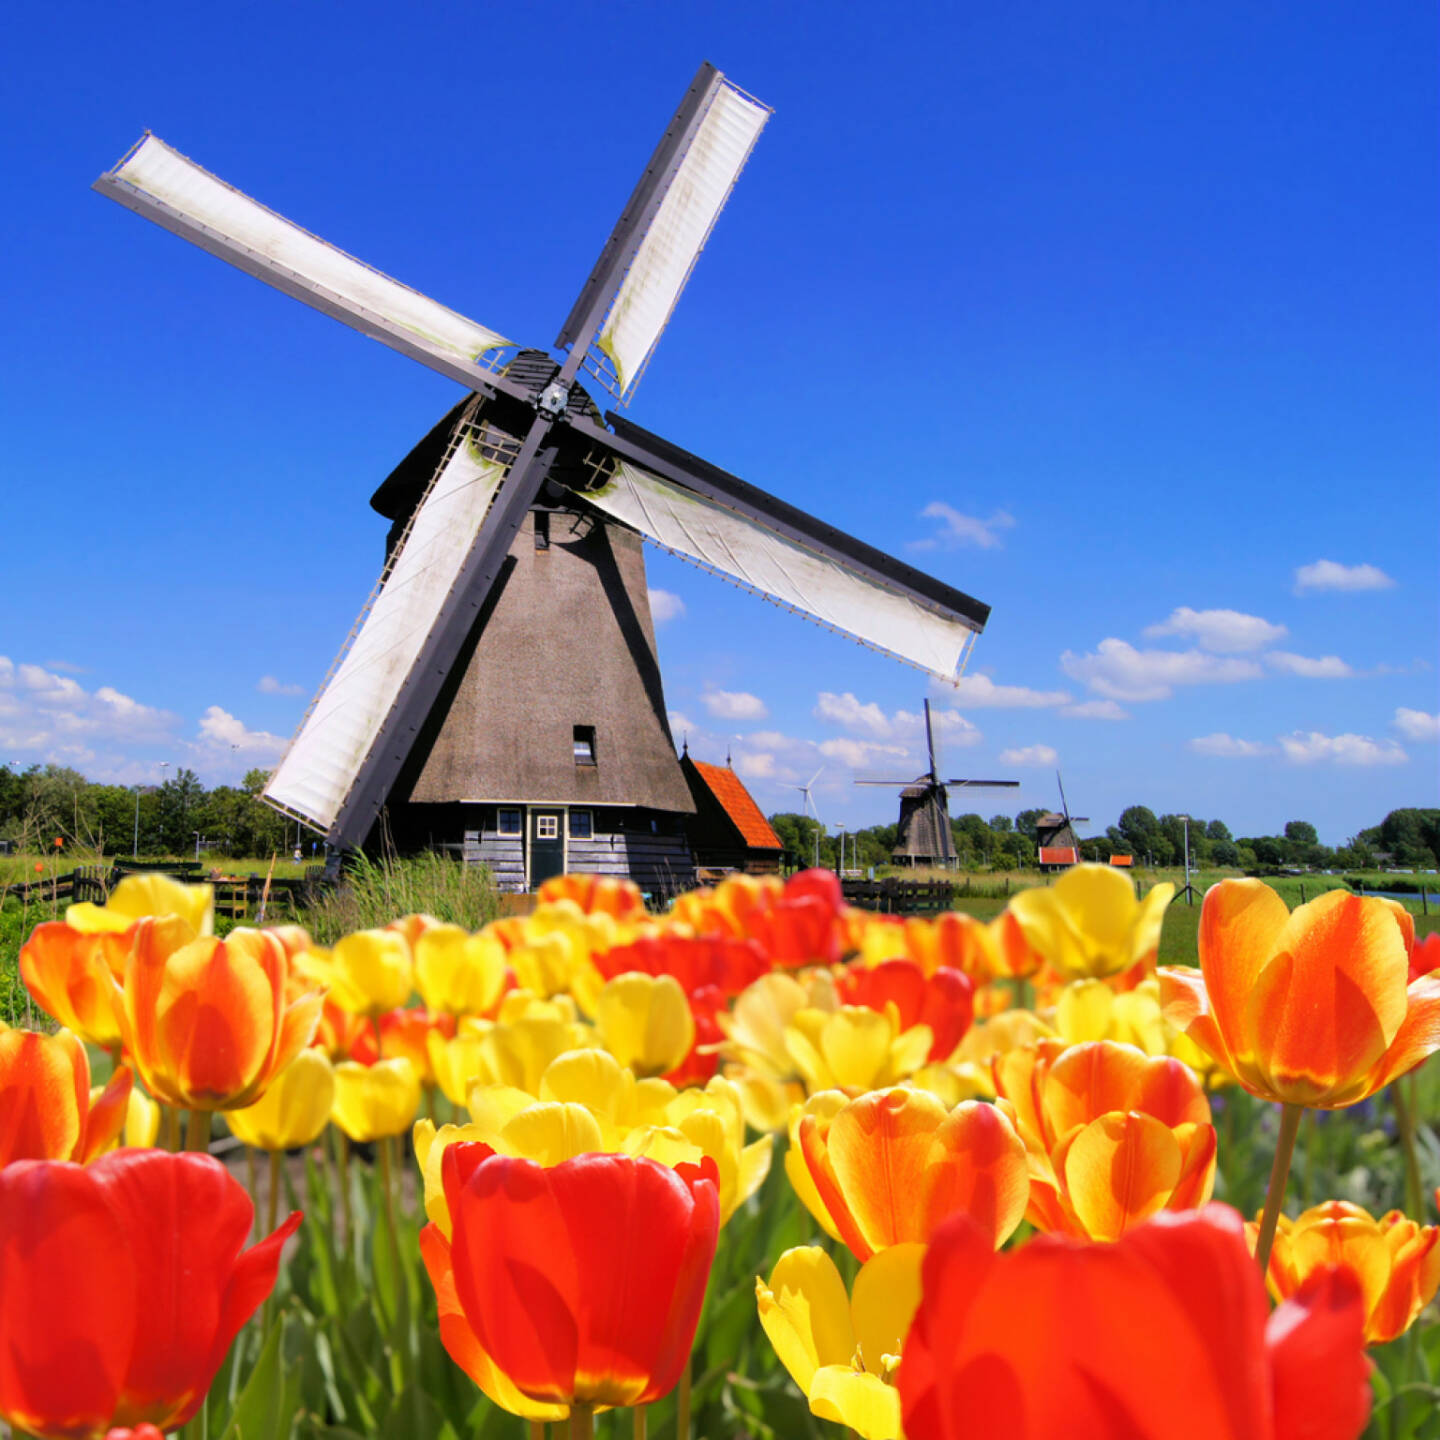 Windmühle, Tulpen, gegen, Holland, Niederlande, NL, http://www.shutterstock.com/de/pic-112674380/stock-photo-traditional-dutch-windmills-with-vibrant-tulips-in-the-foreground-the-netherlands.html (Bild: shutterstock.com)